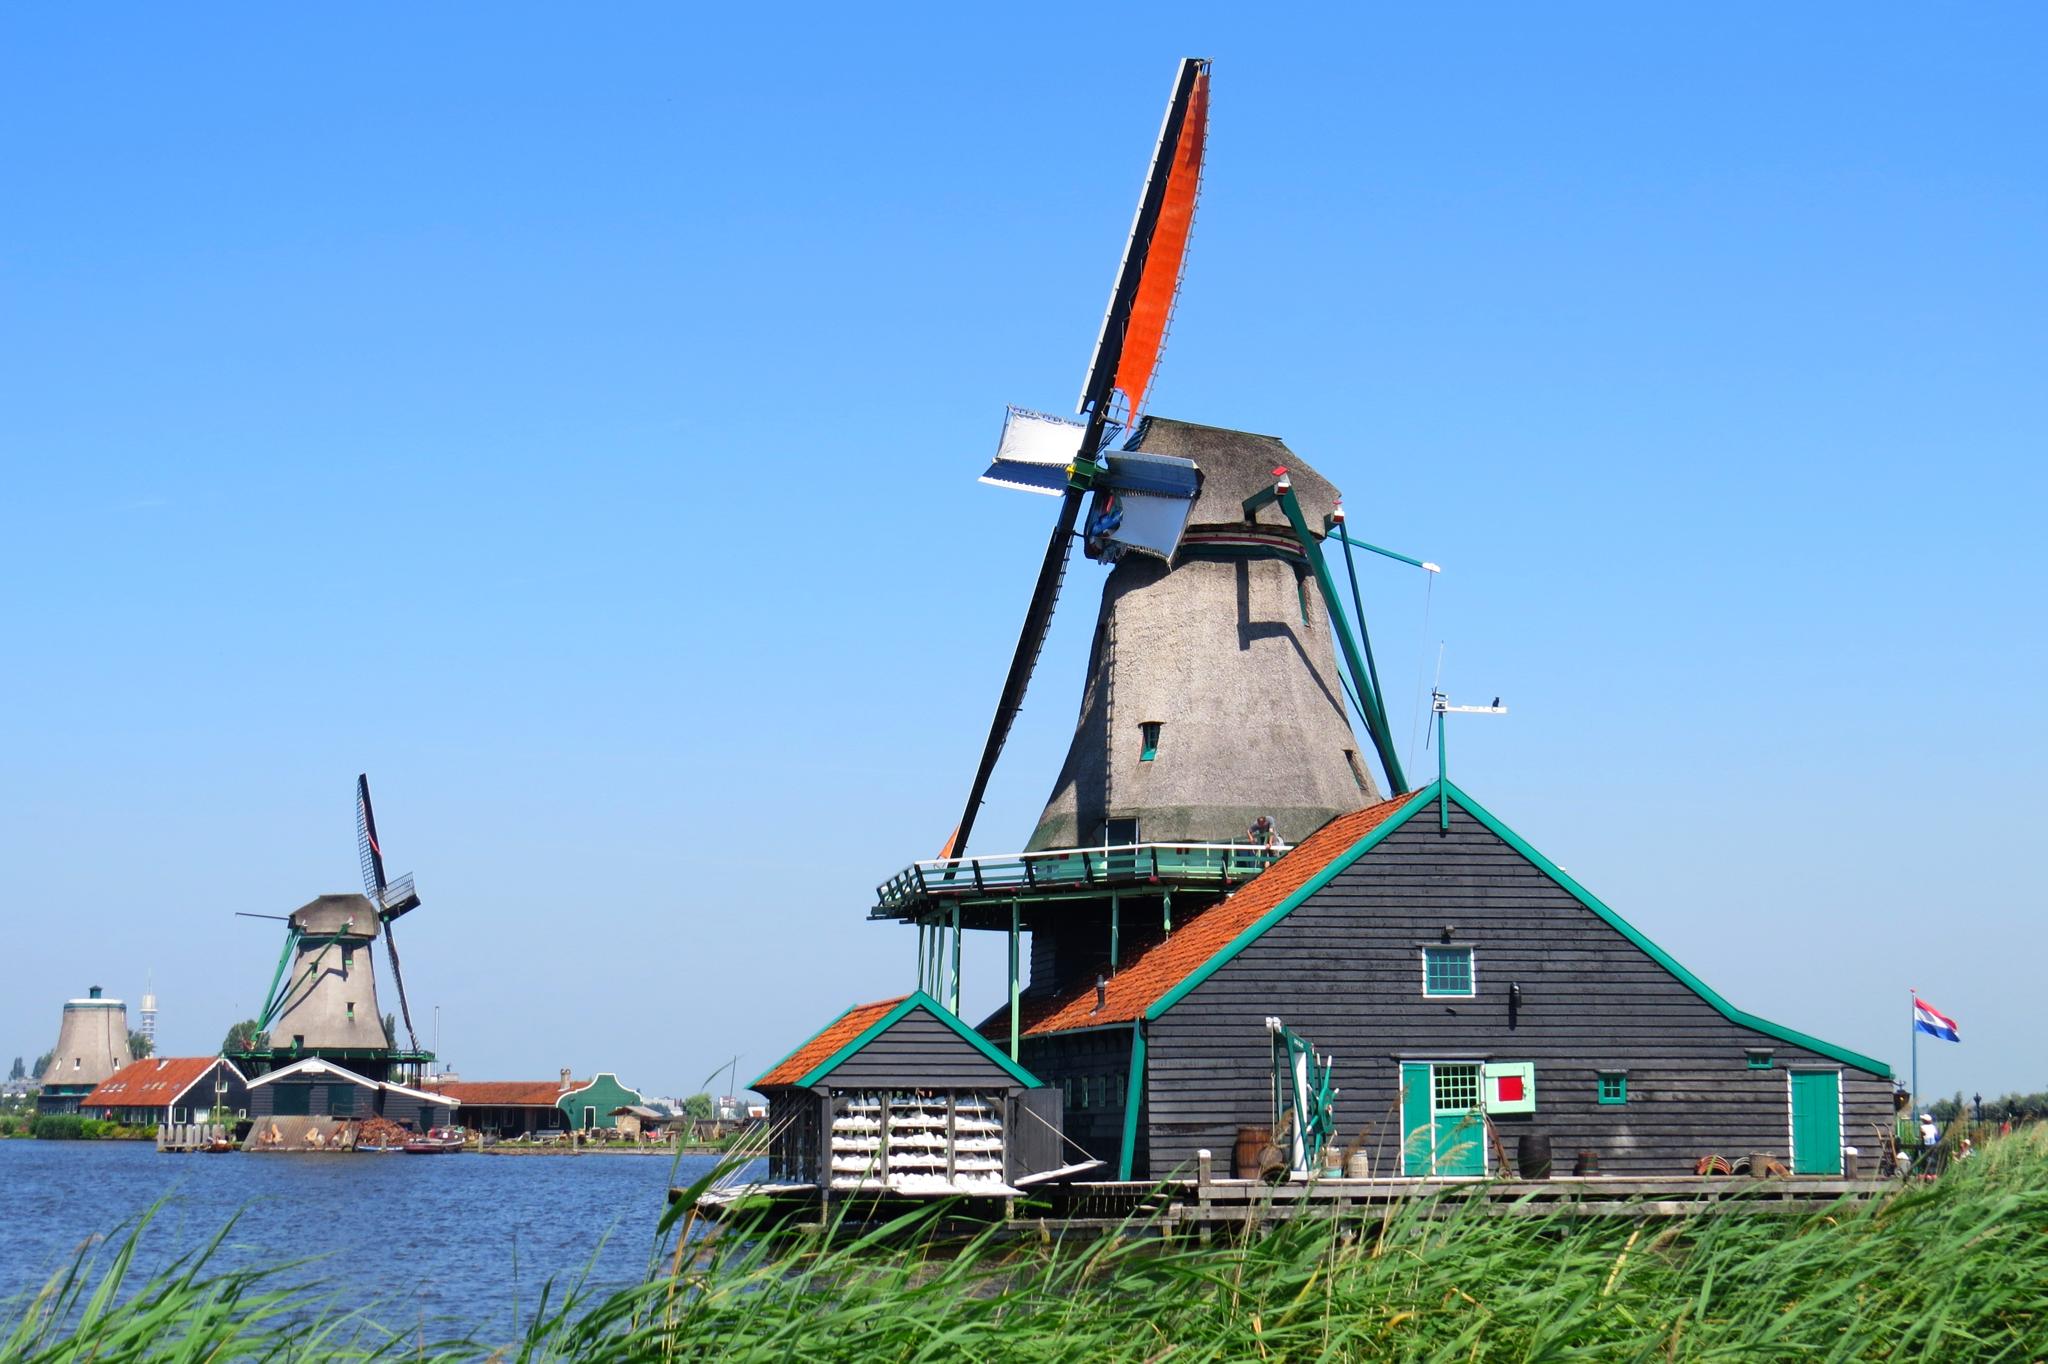 miasteczka w Holandii Zaanse Schans